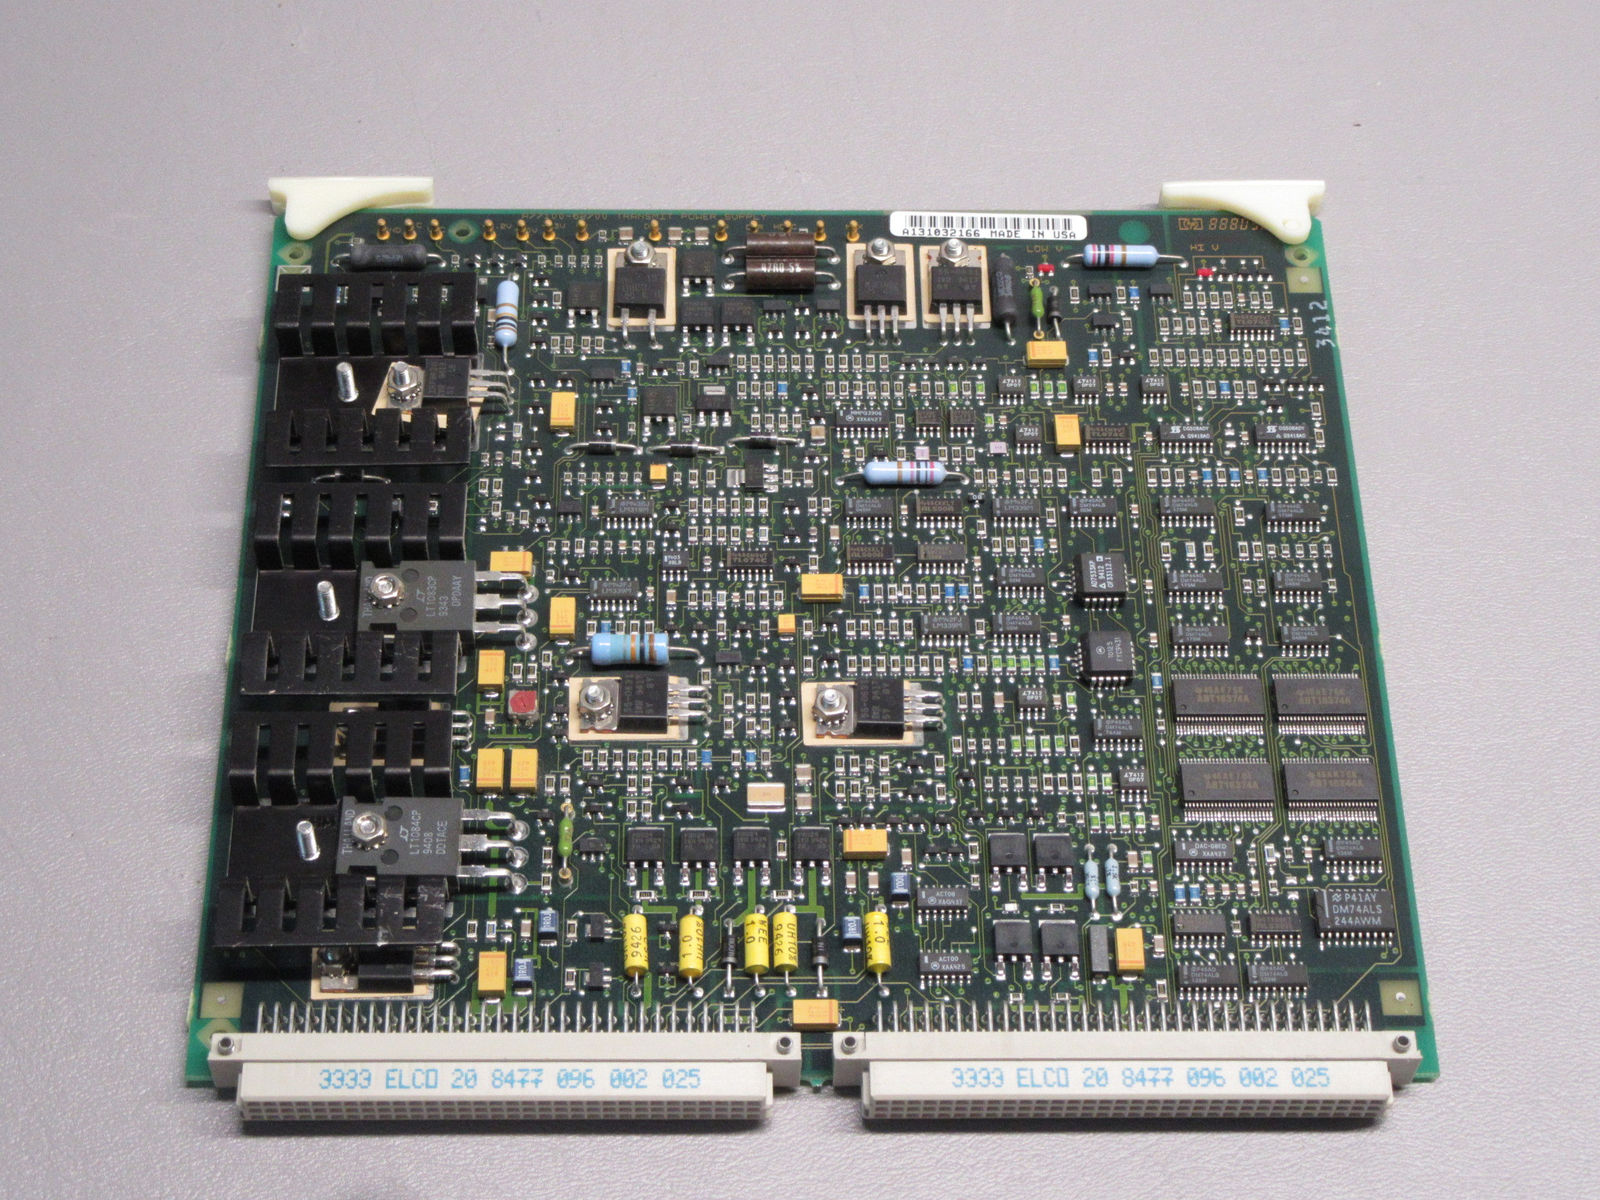 HP M2406A Sonos Transmit Power Supply Board For Ultrasound Machine A77100-62700